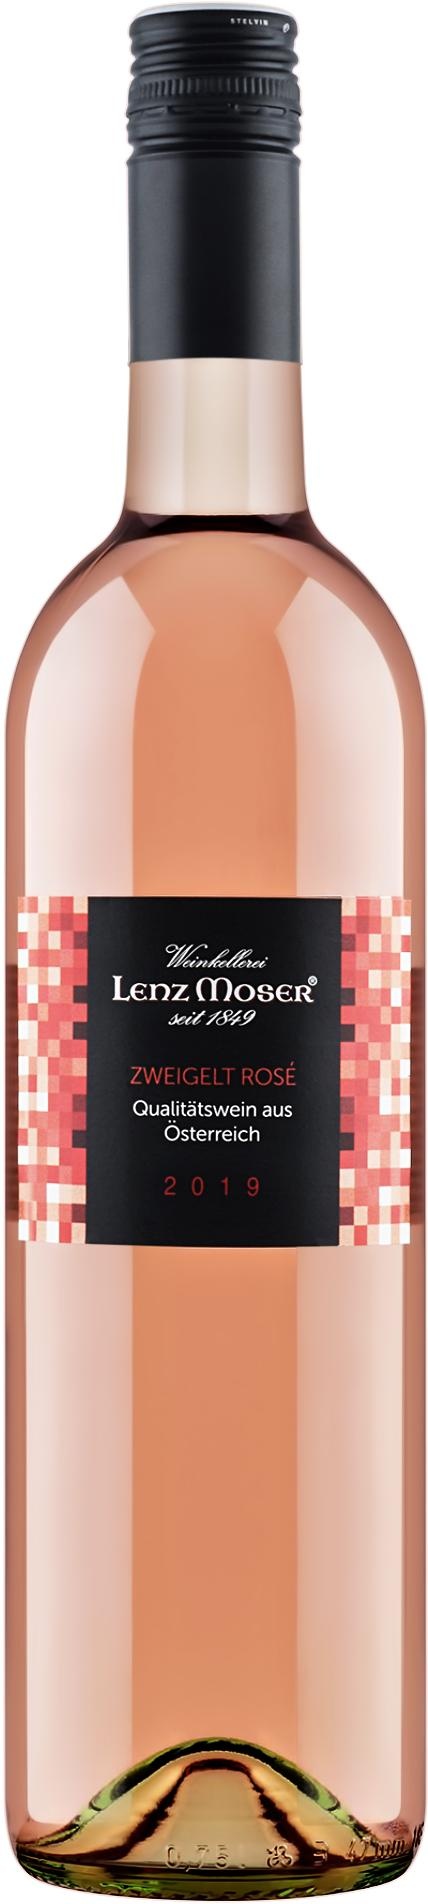 Цвайгельт розовое сухое. Вино Lenz Moser, Zweigelt. Вино Zweigelt Rose. Вино Ленц Мозер Цвайгельт розовое. Zweigelt Rose вино Австрия.